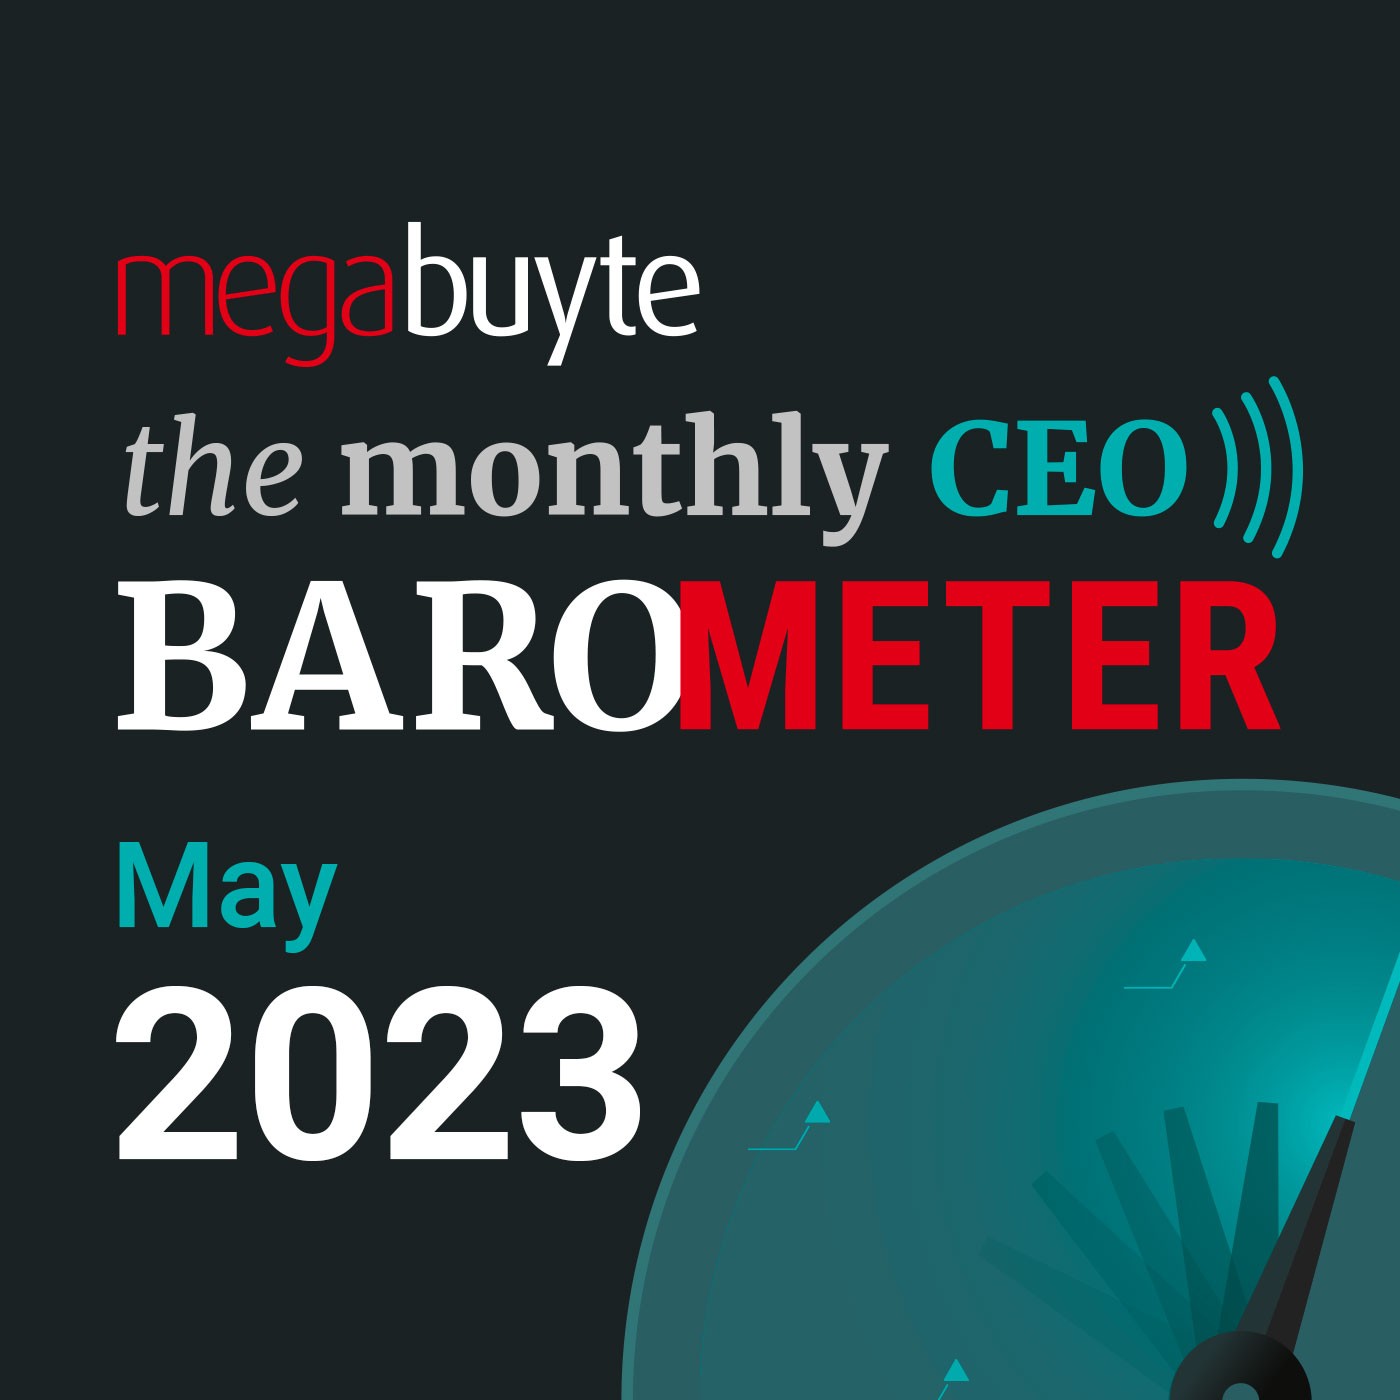 Megabuyte CEOBarometer - May 2023 update